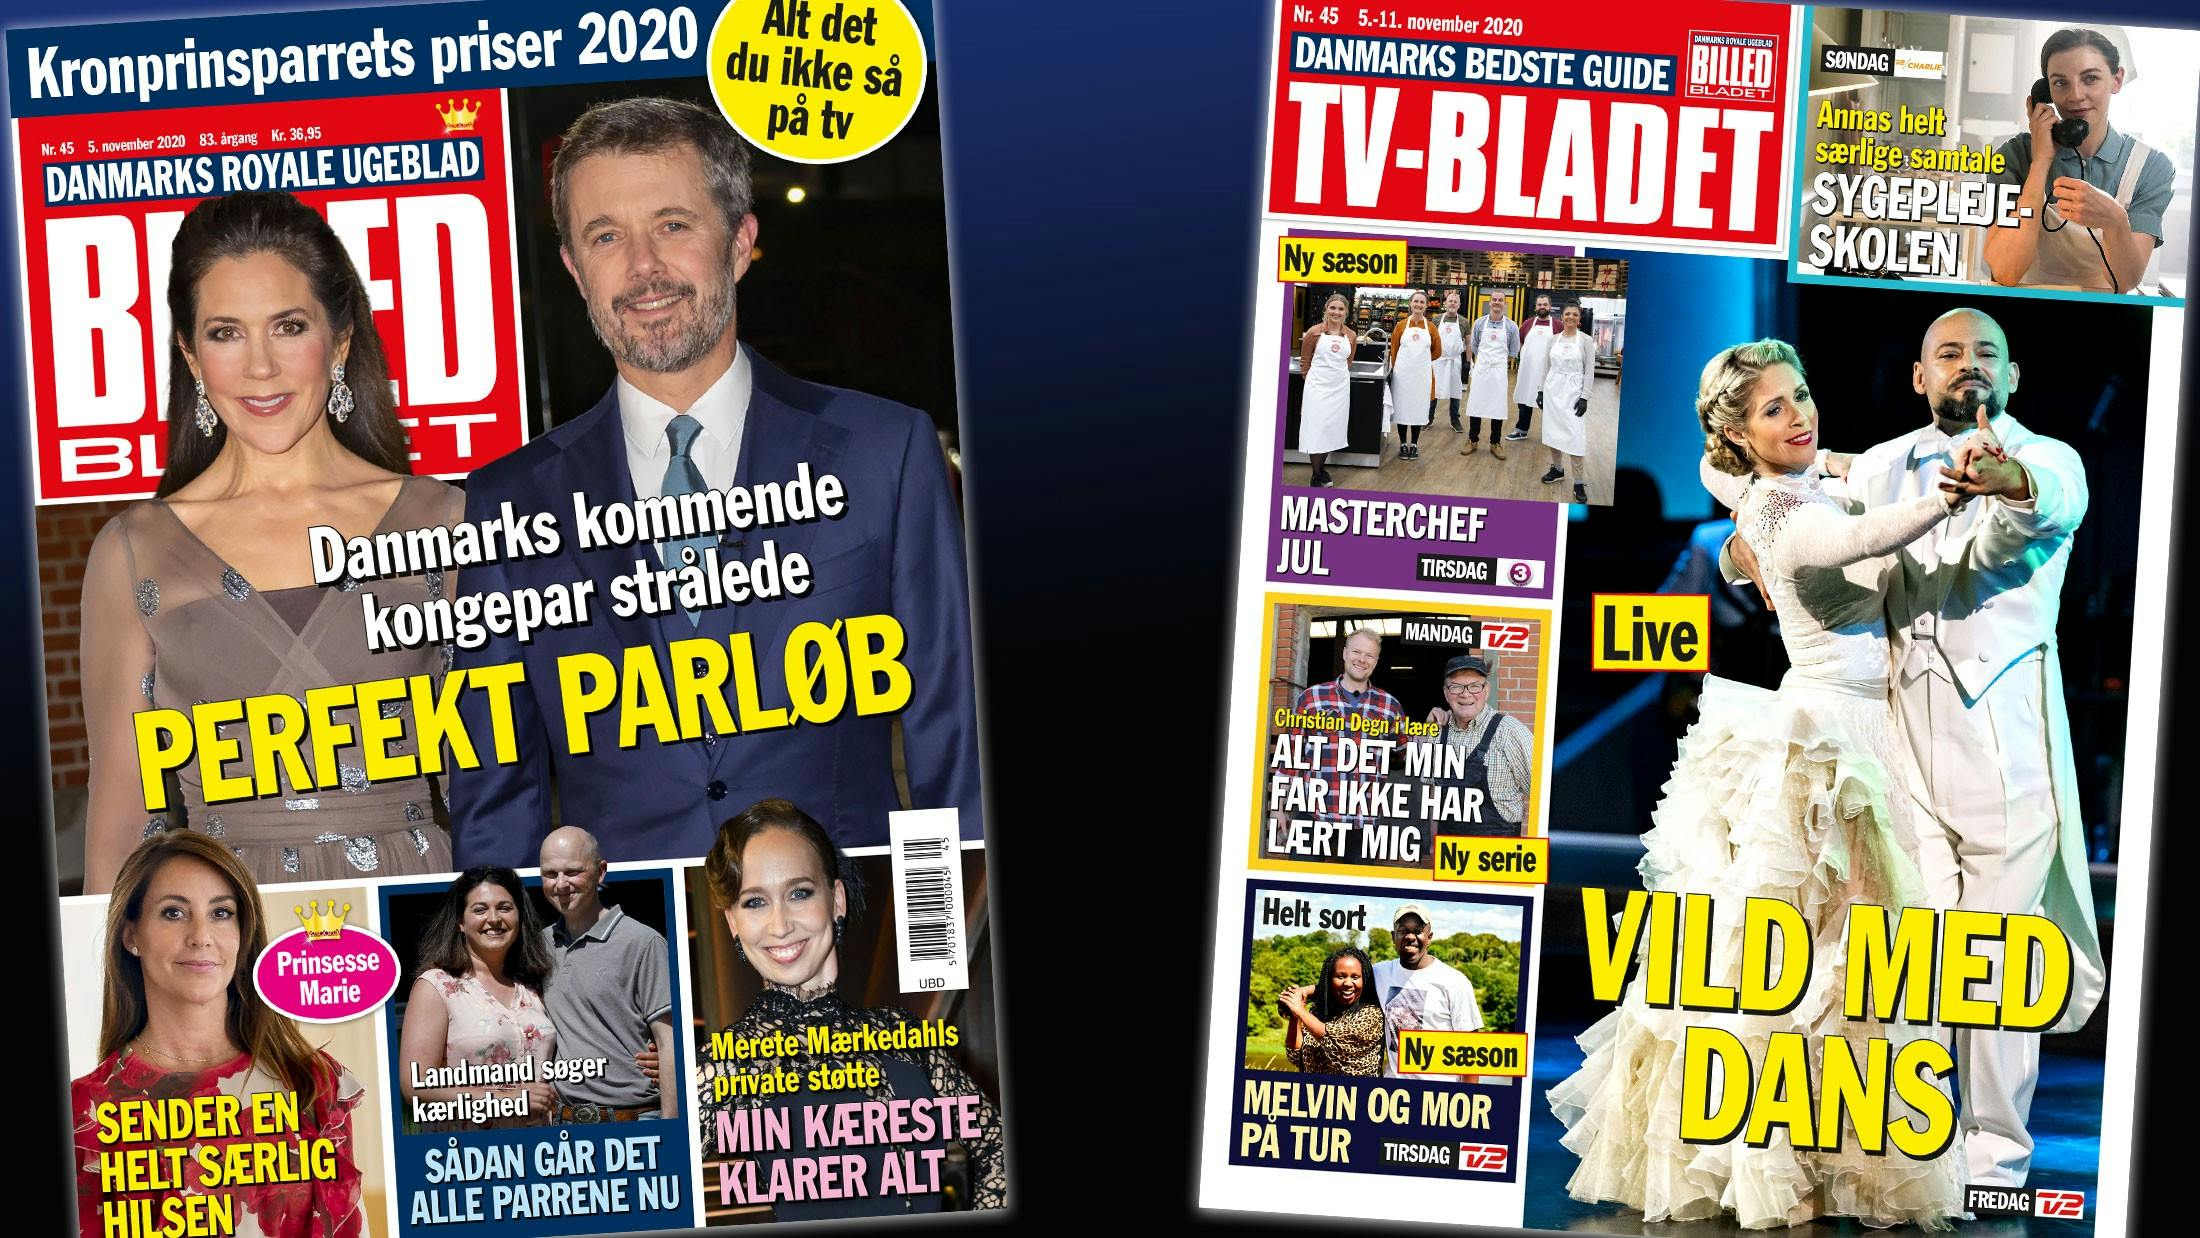 https://imgix.billedbladet.dk/webgrafik45.jpg